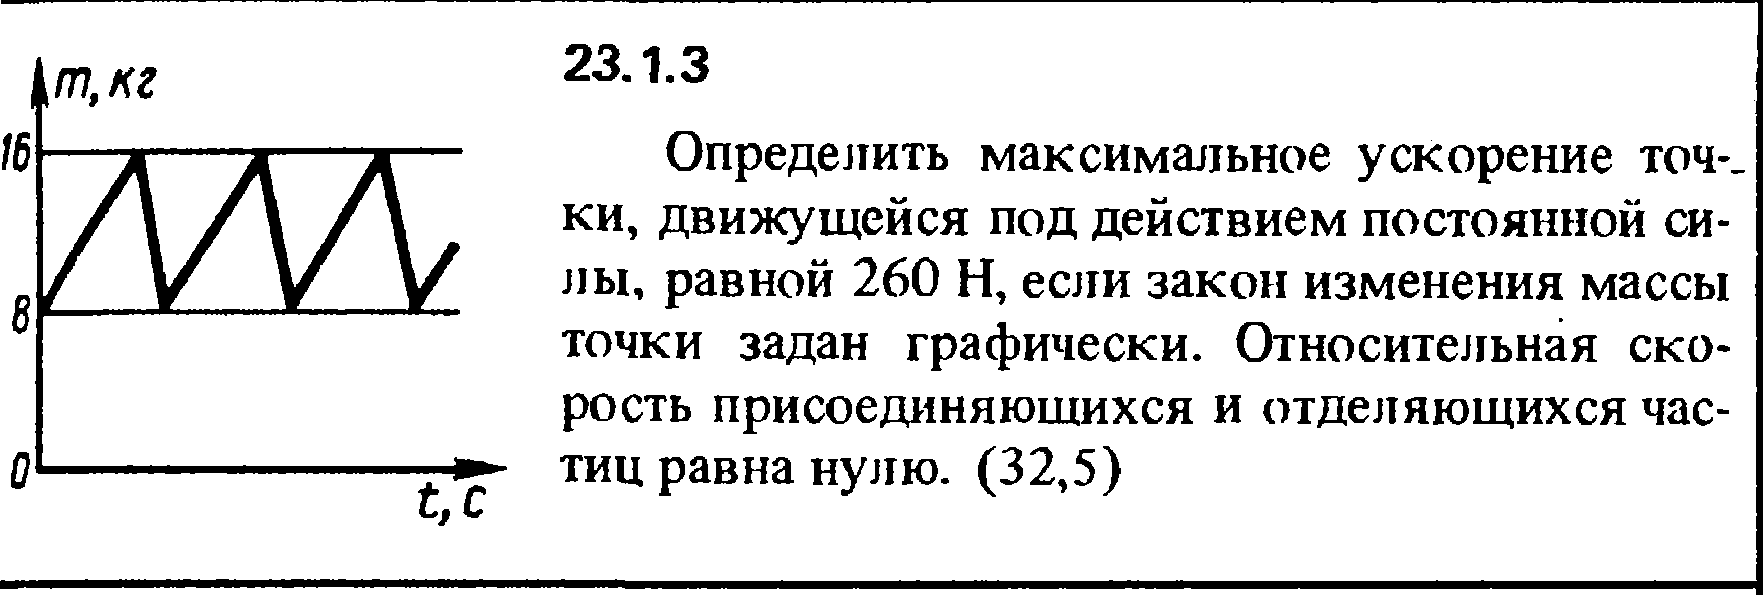 Решение 23.1.3 из сборника (решебника) Кепе О.Е. 1989